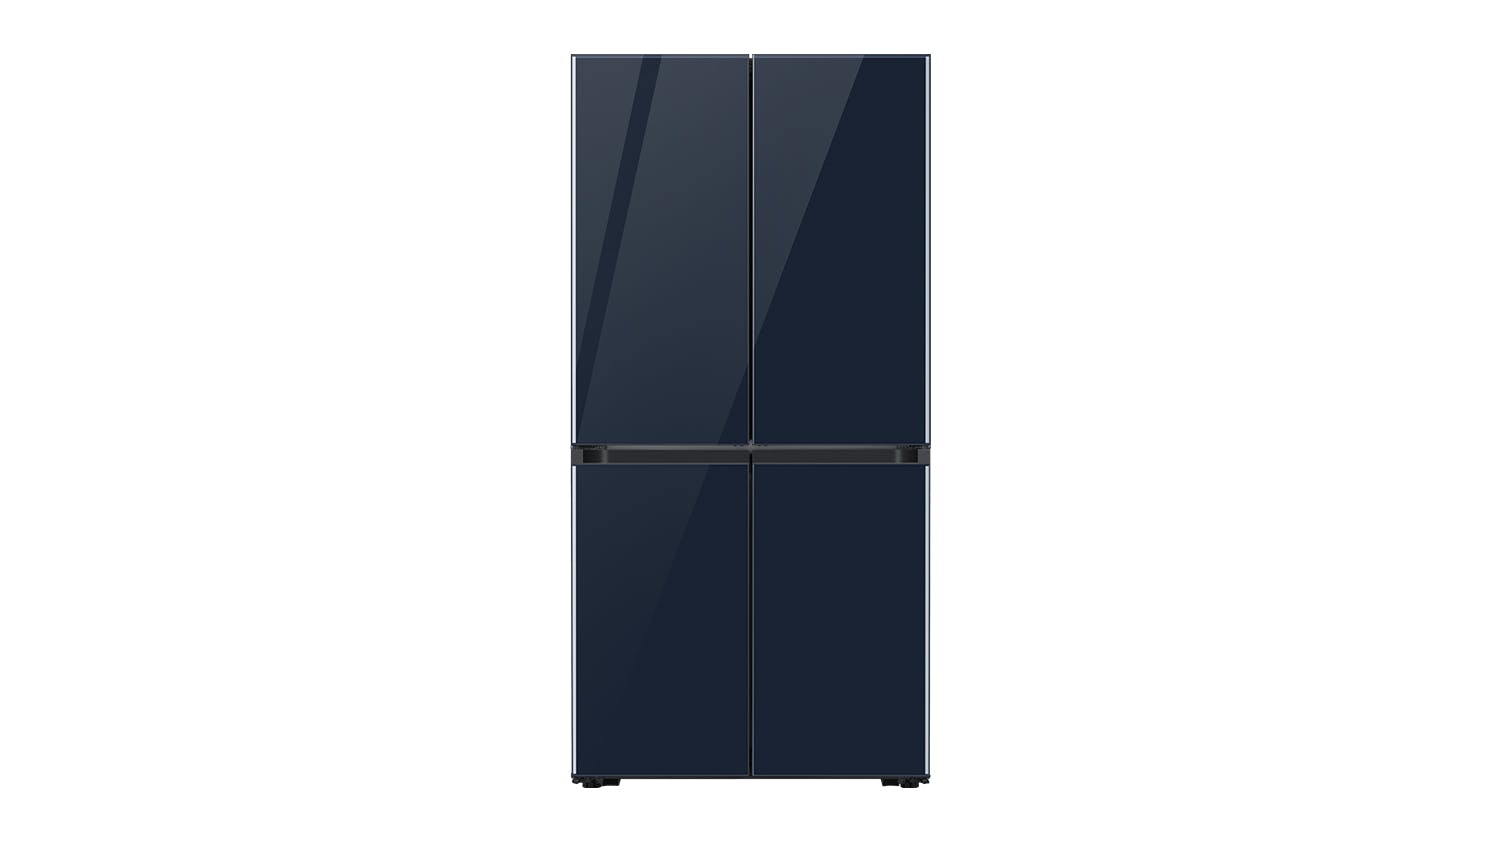 Samsung Bespoke Fridge Freezer Top Door Panel - Glam Navy (RA-F17DUU41GG)